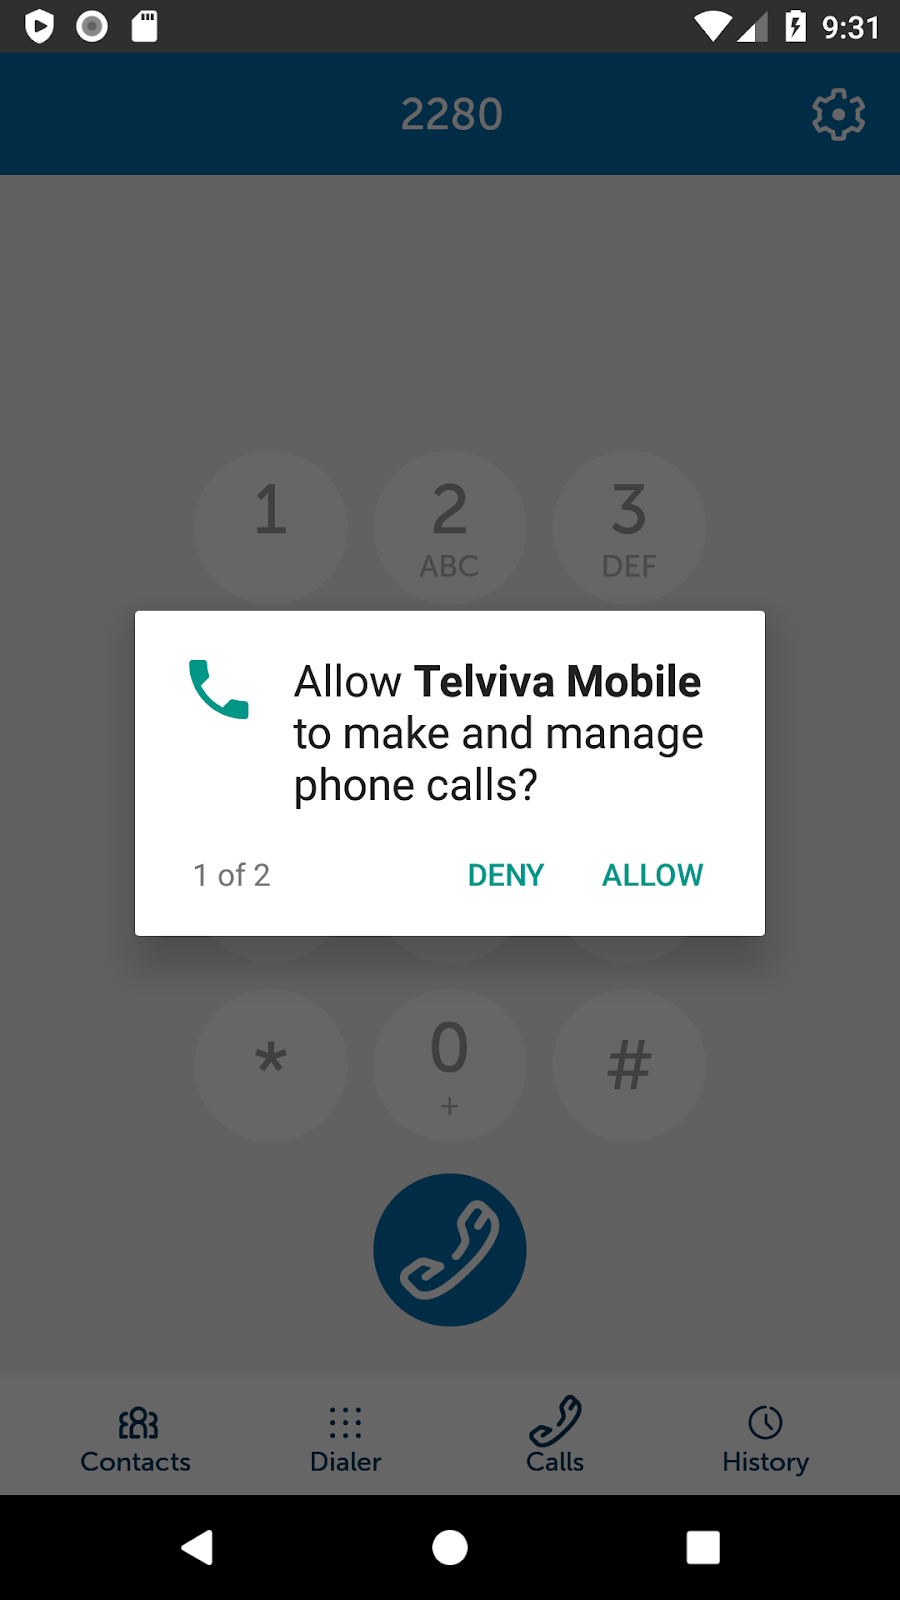 Telviva Communications